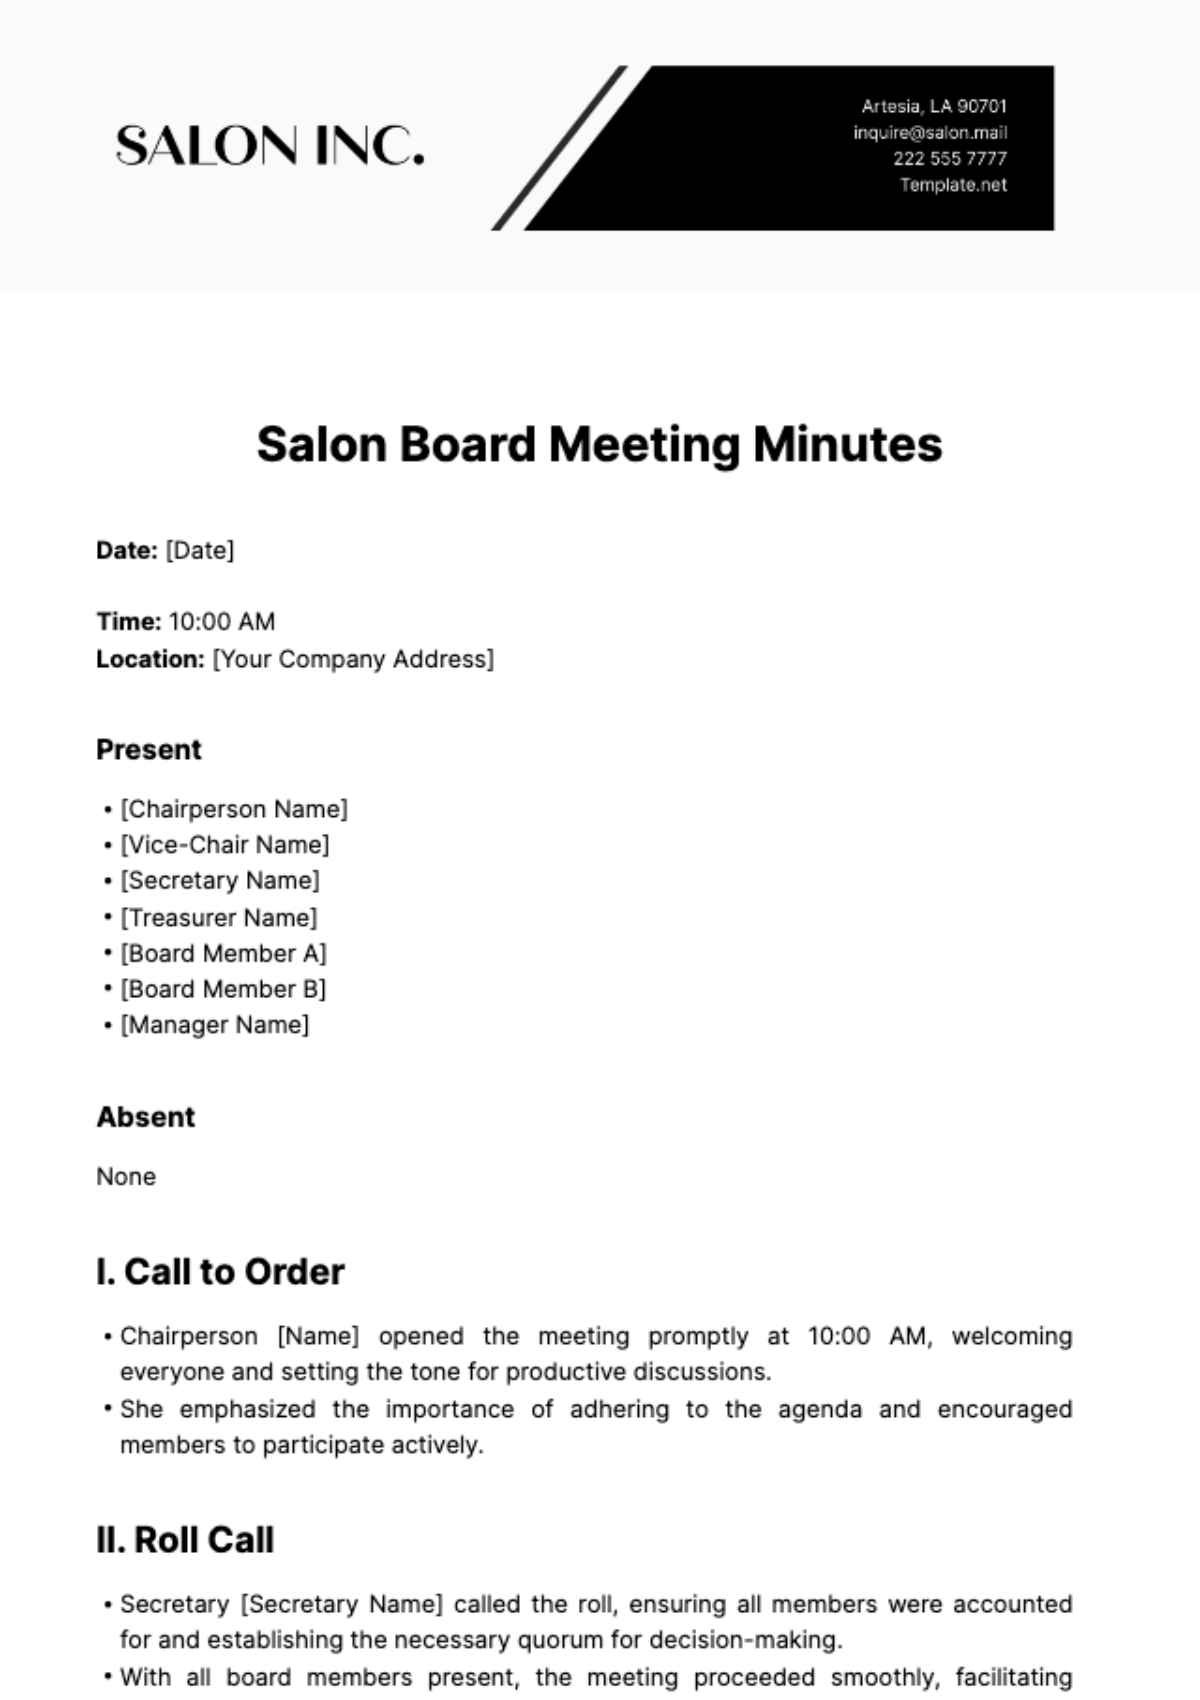 Salon Board Meeting Minute Template